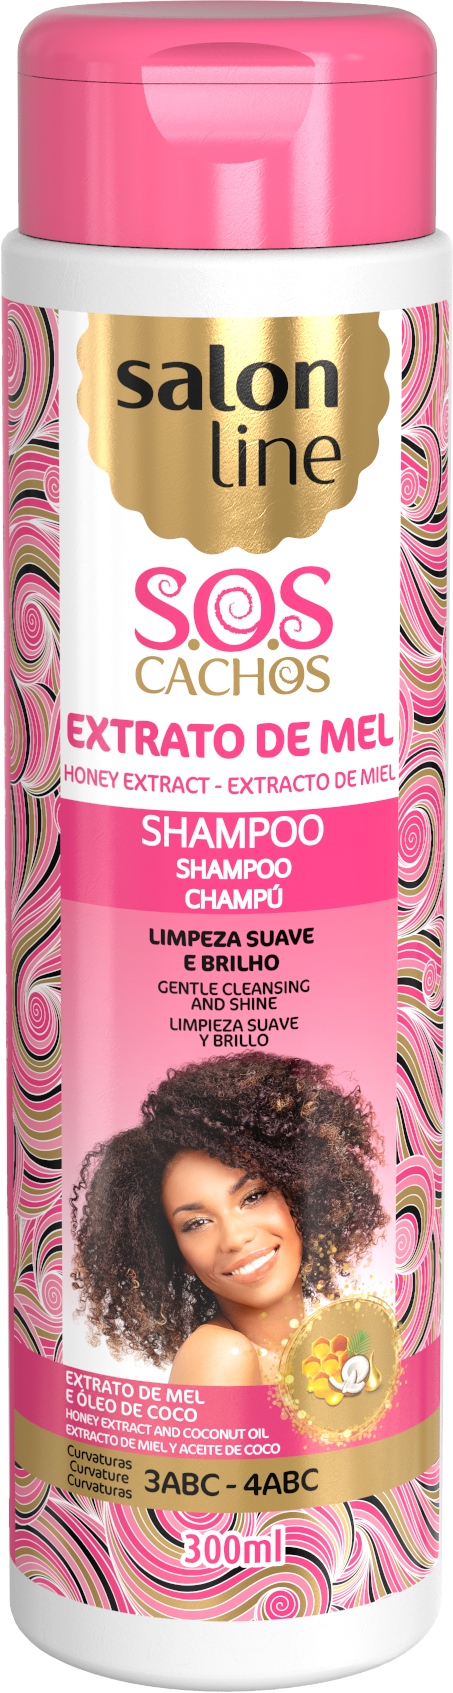 Salon Line S.O.S Cachos Honey Extract Shampoo 300ml Salon Line